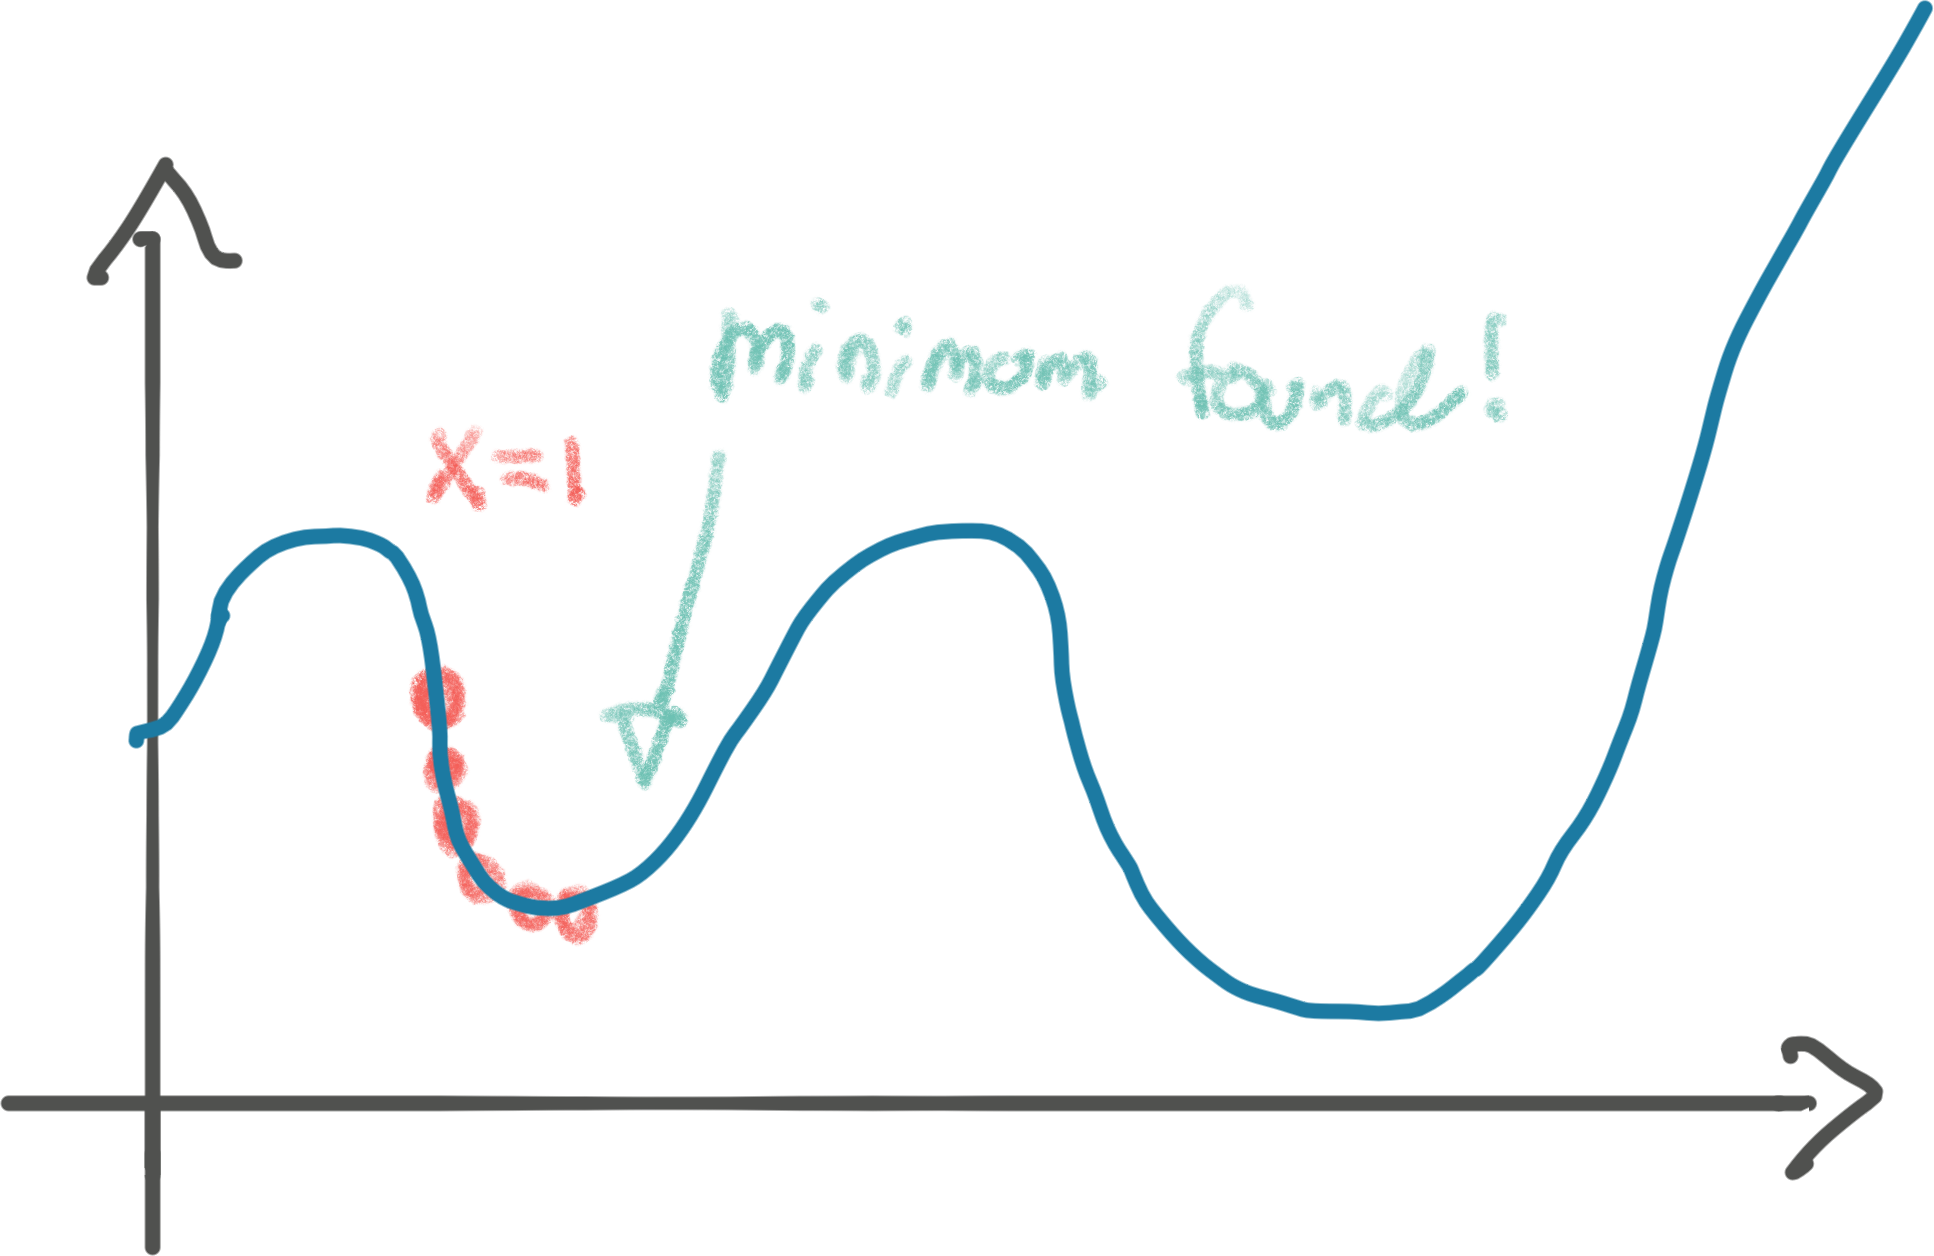 Minimum of function with gradient descent